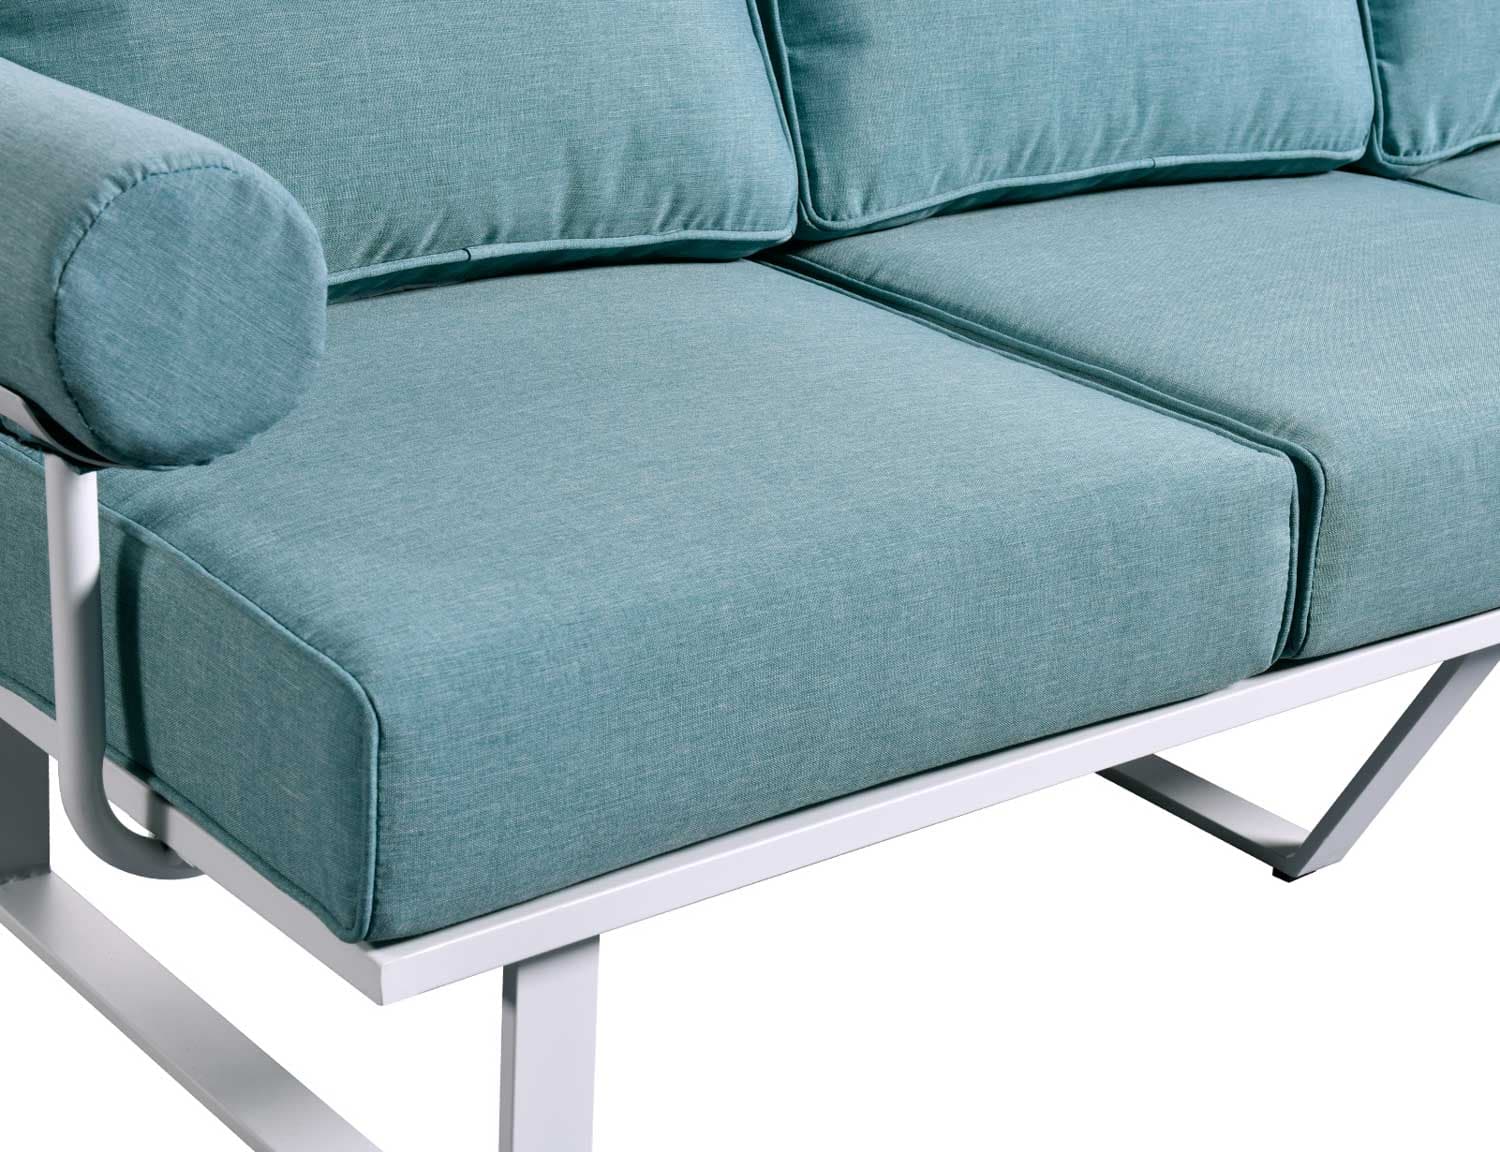 Ovios Patio Bistro Set Outdoor Furniture 4-Piece, Aluminum Frame, 5'' Cushion